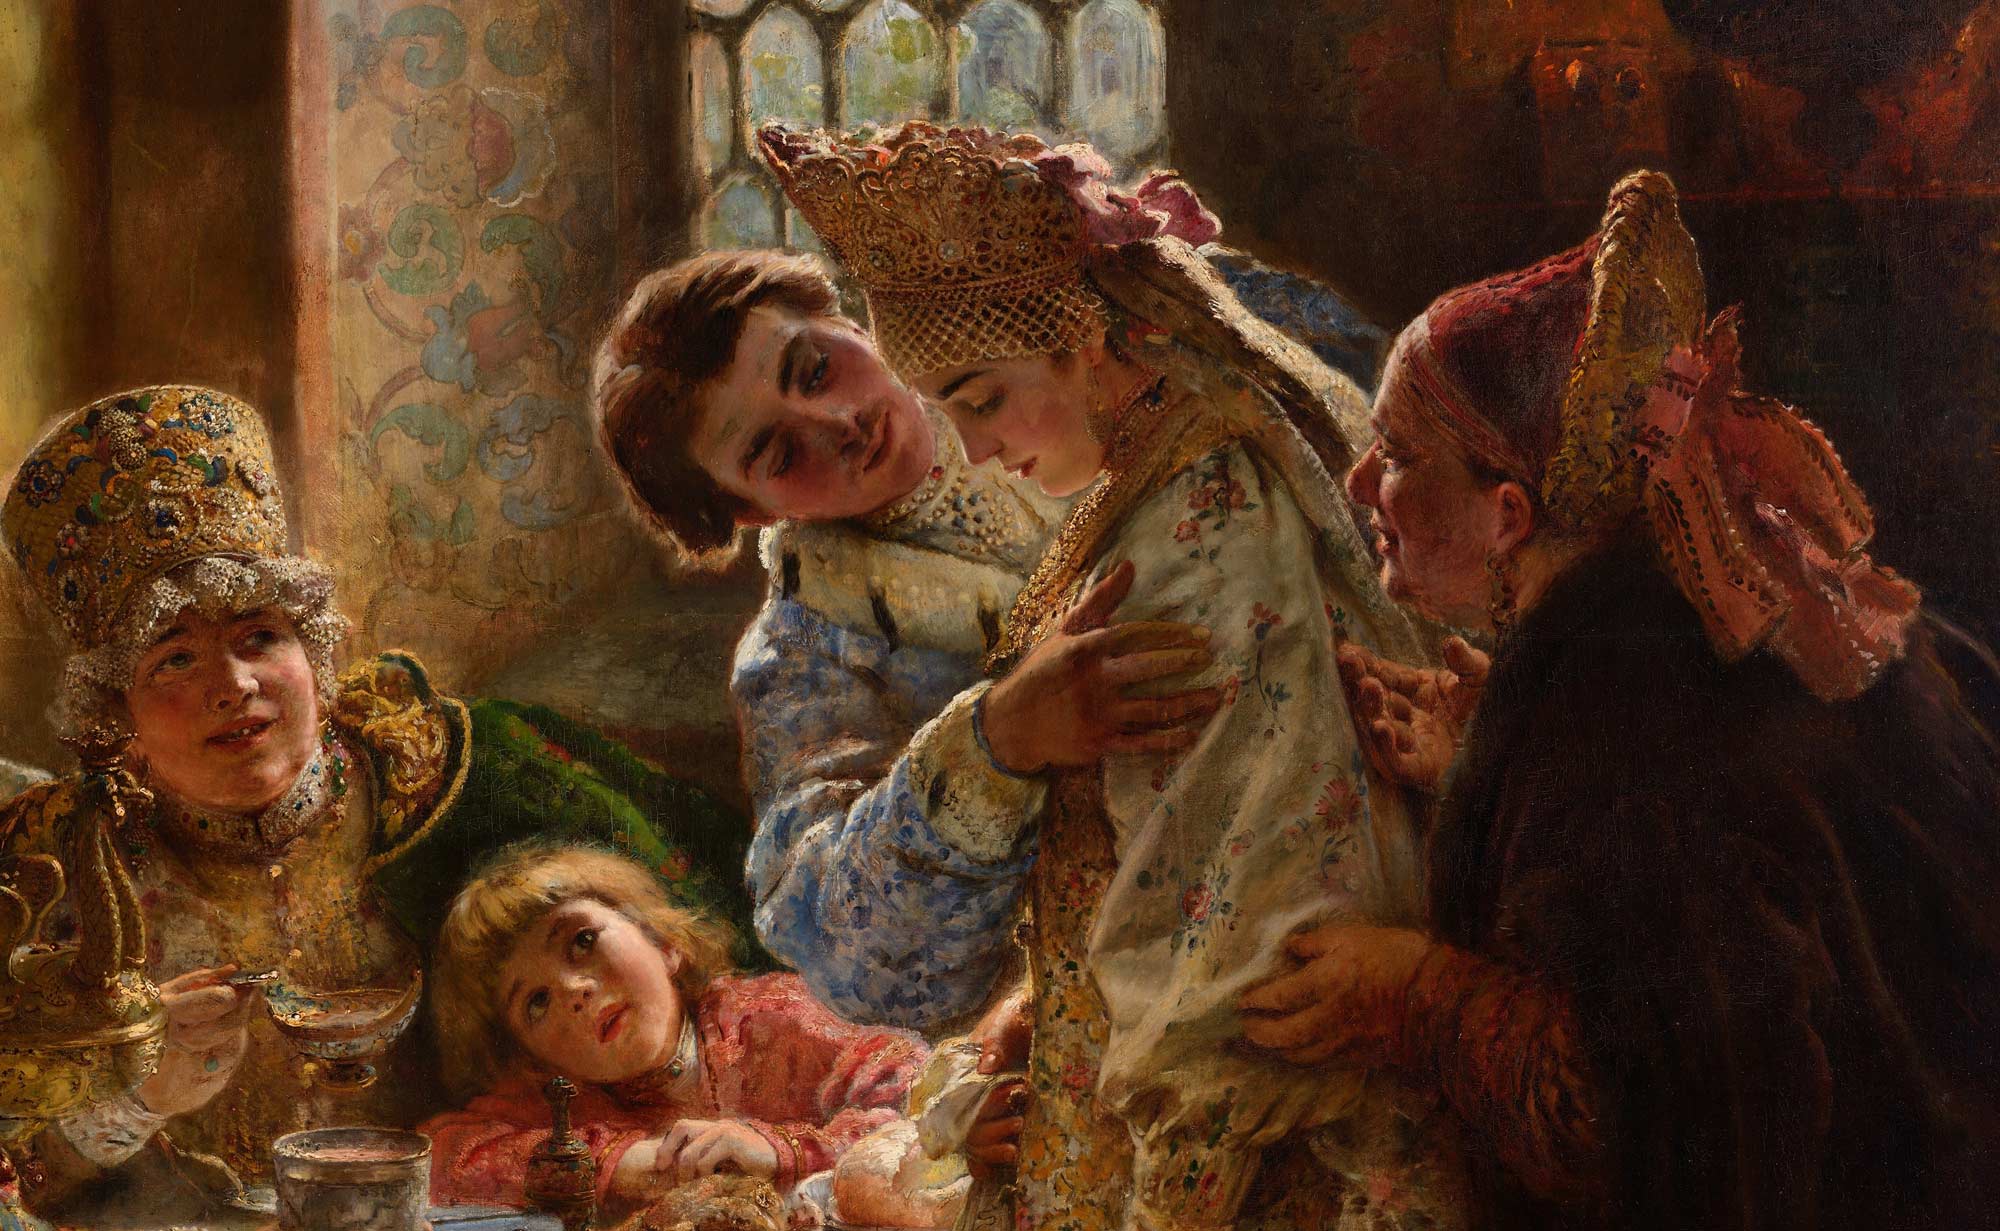 Konstantin Makovsky, A Boyar Wedding Feast, 1883